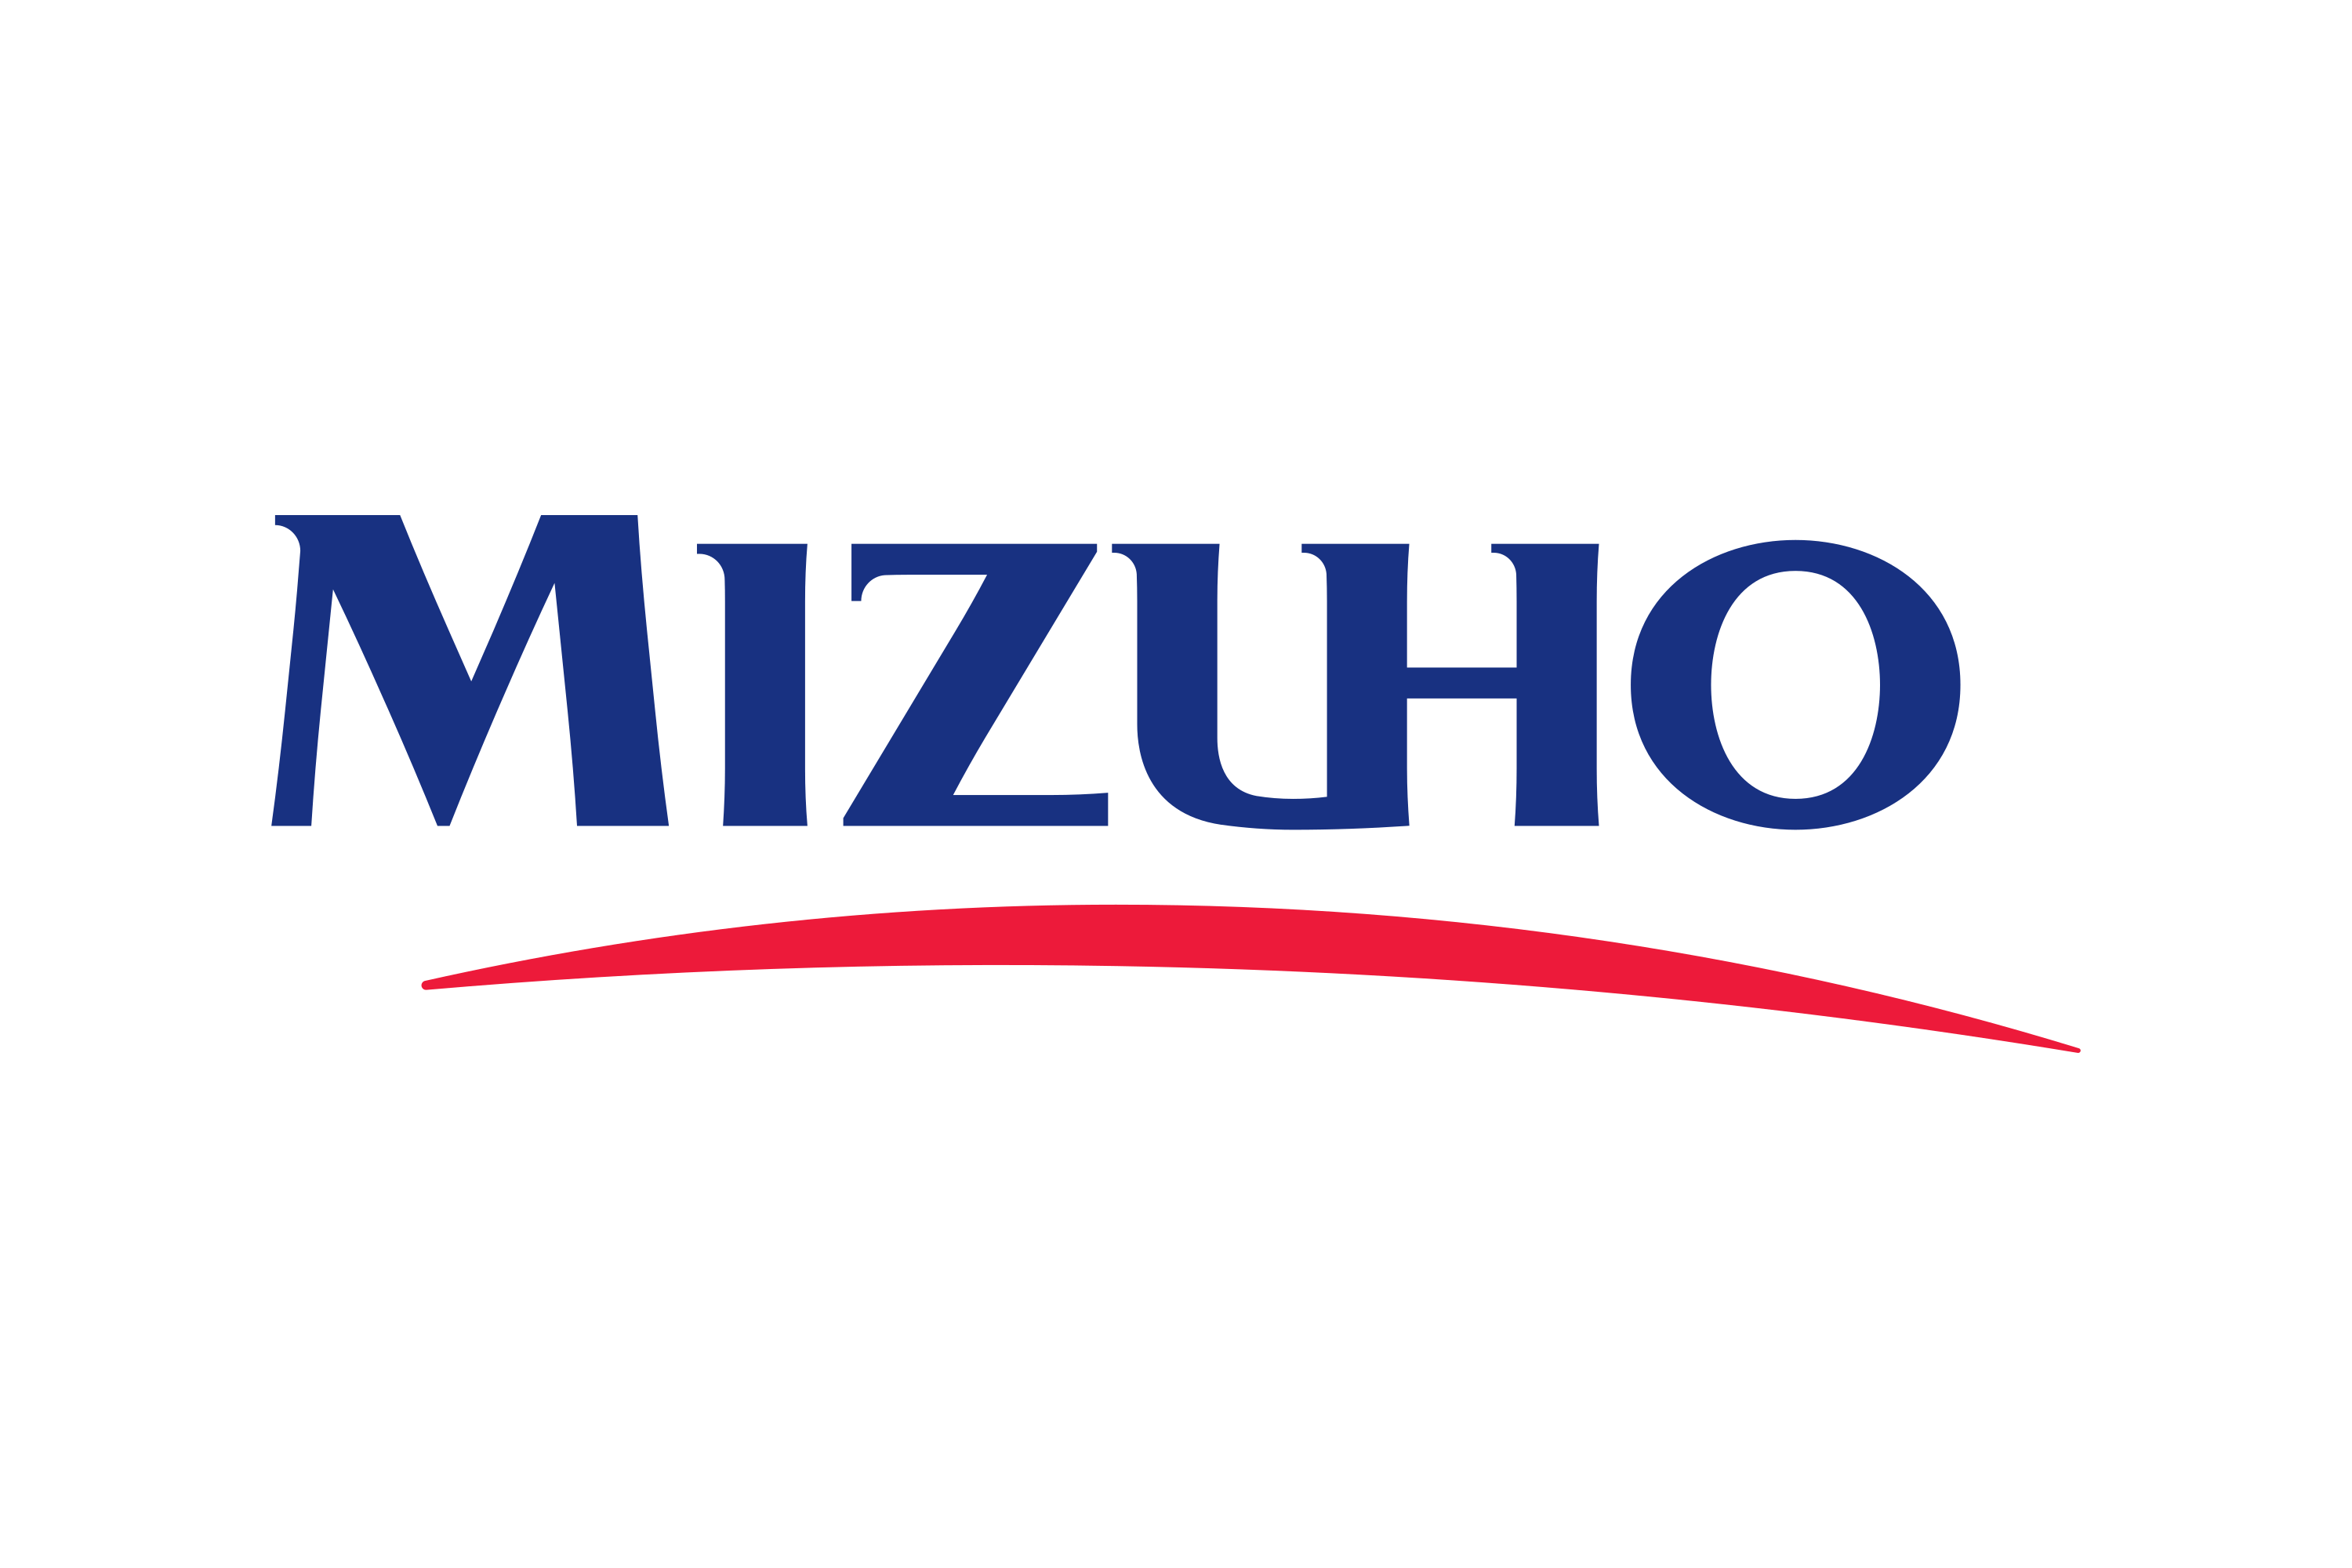 Download Mizuho Financial Group Logo in SVG Vector or PNG File Format - Logo.wine